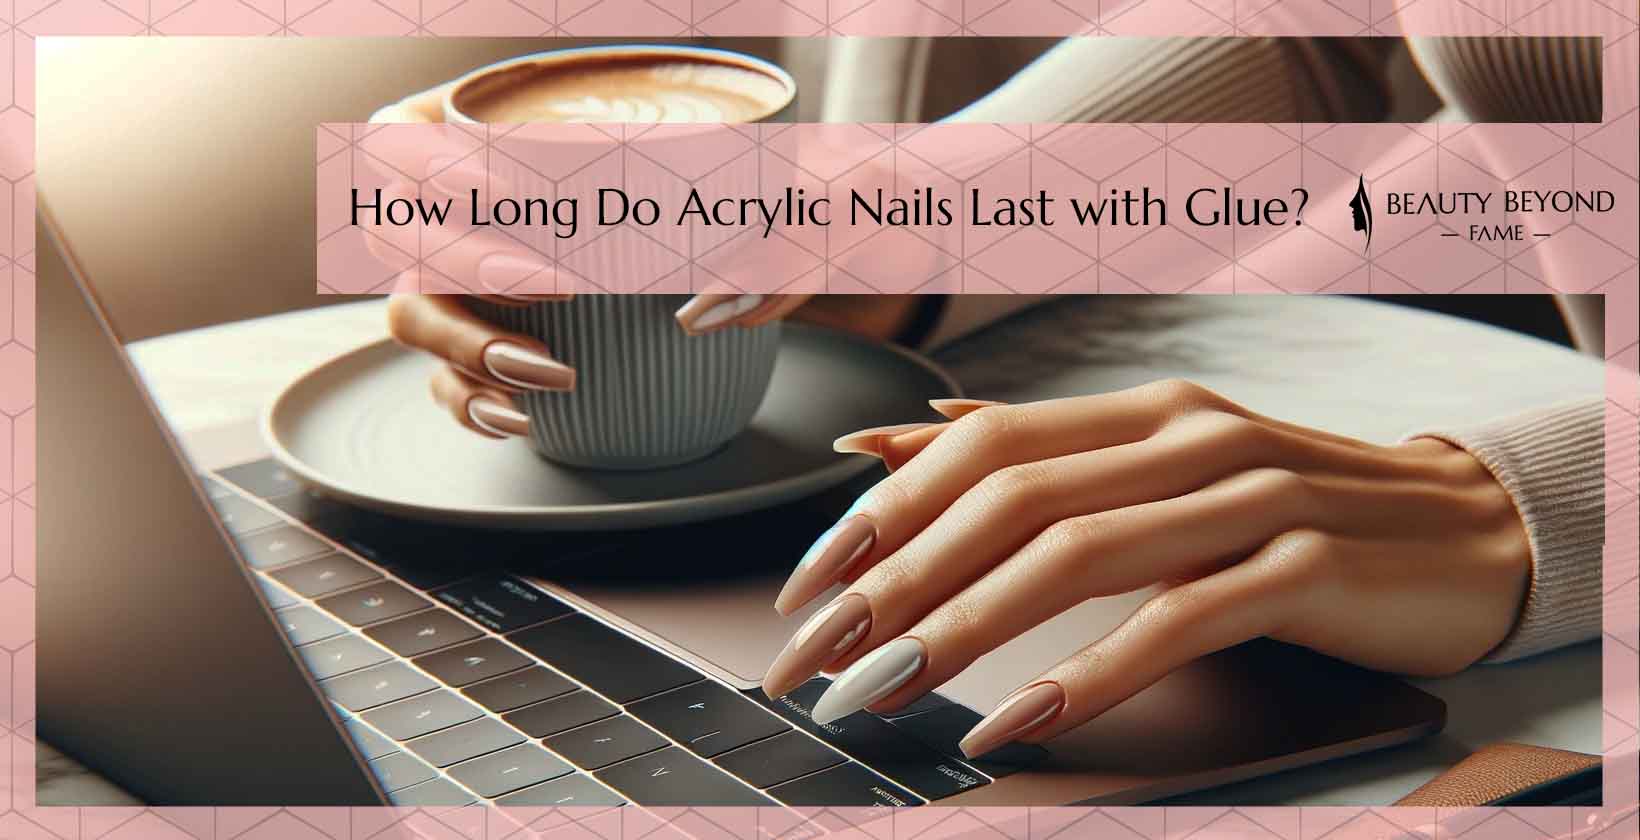 Acrylic Nail Lifespan for Glue